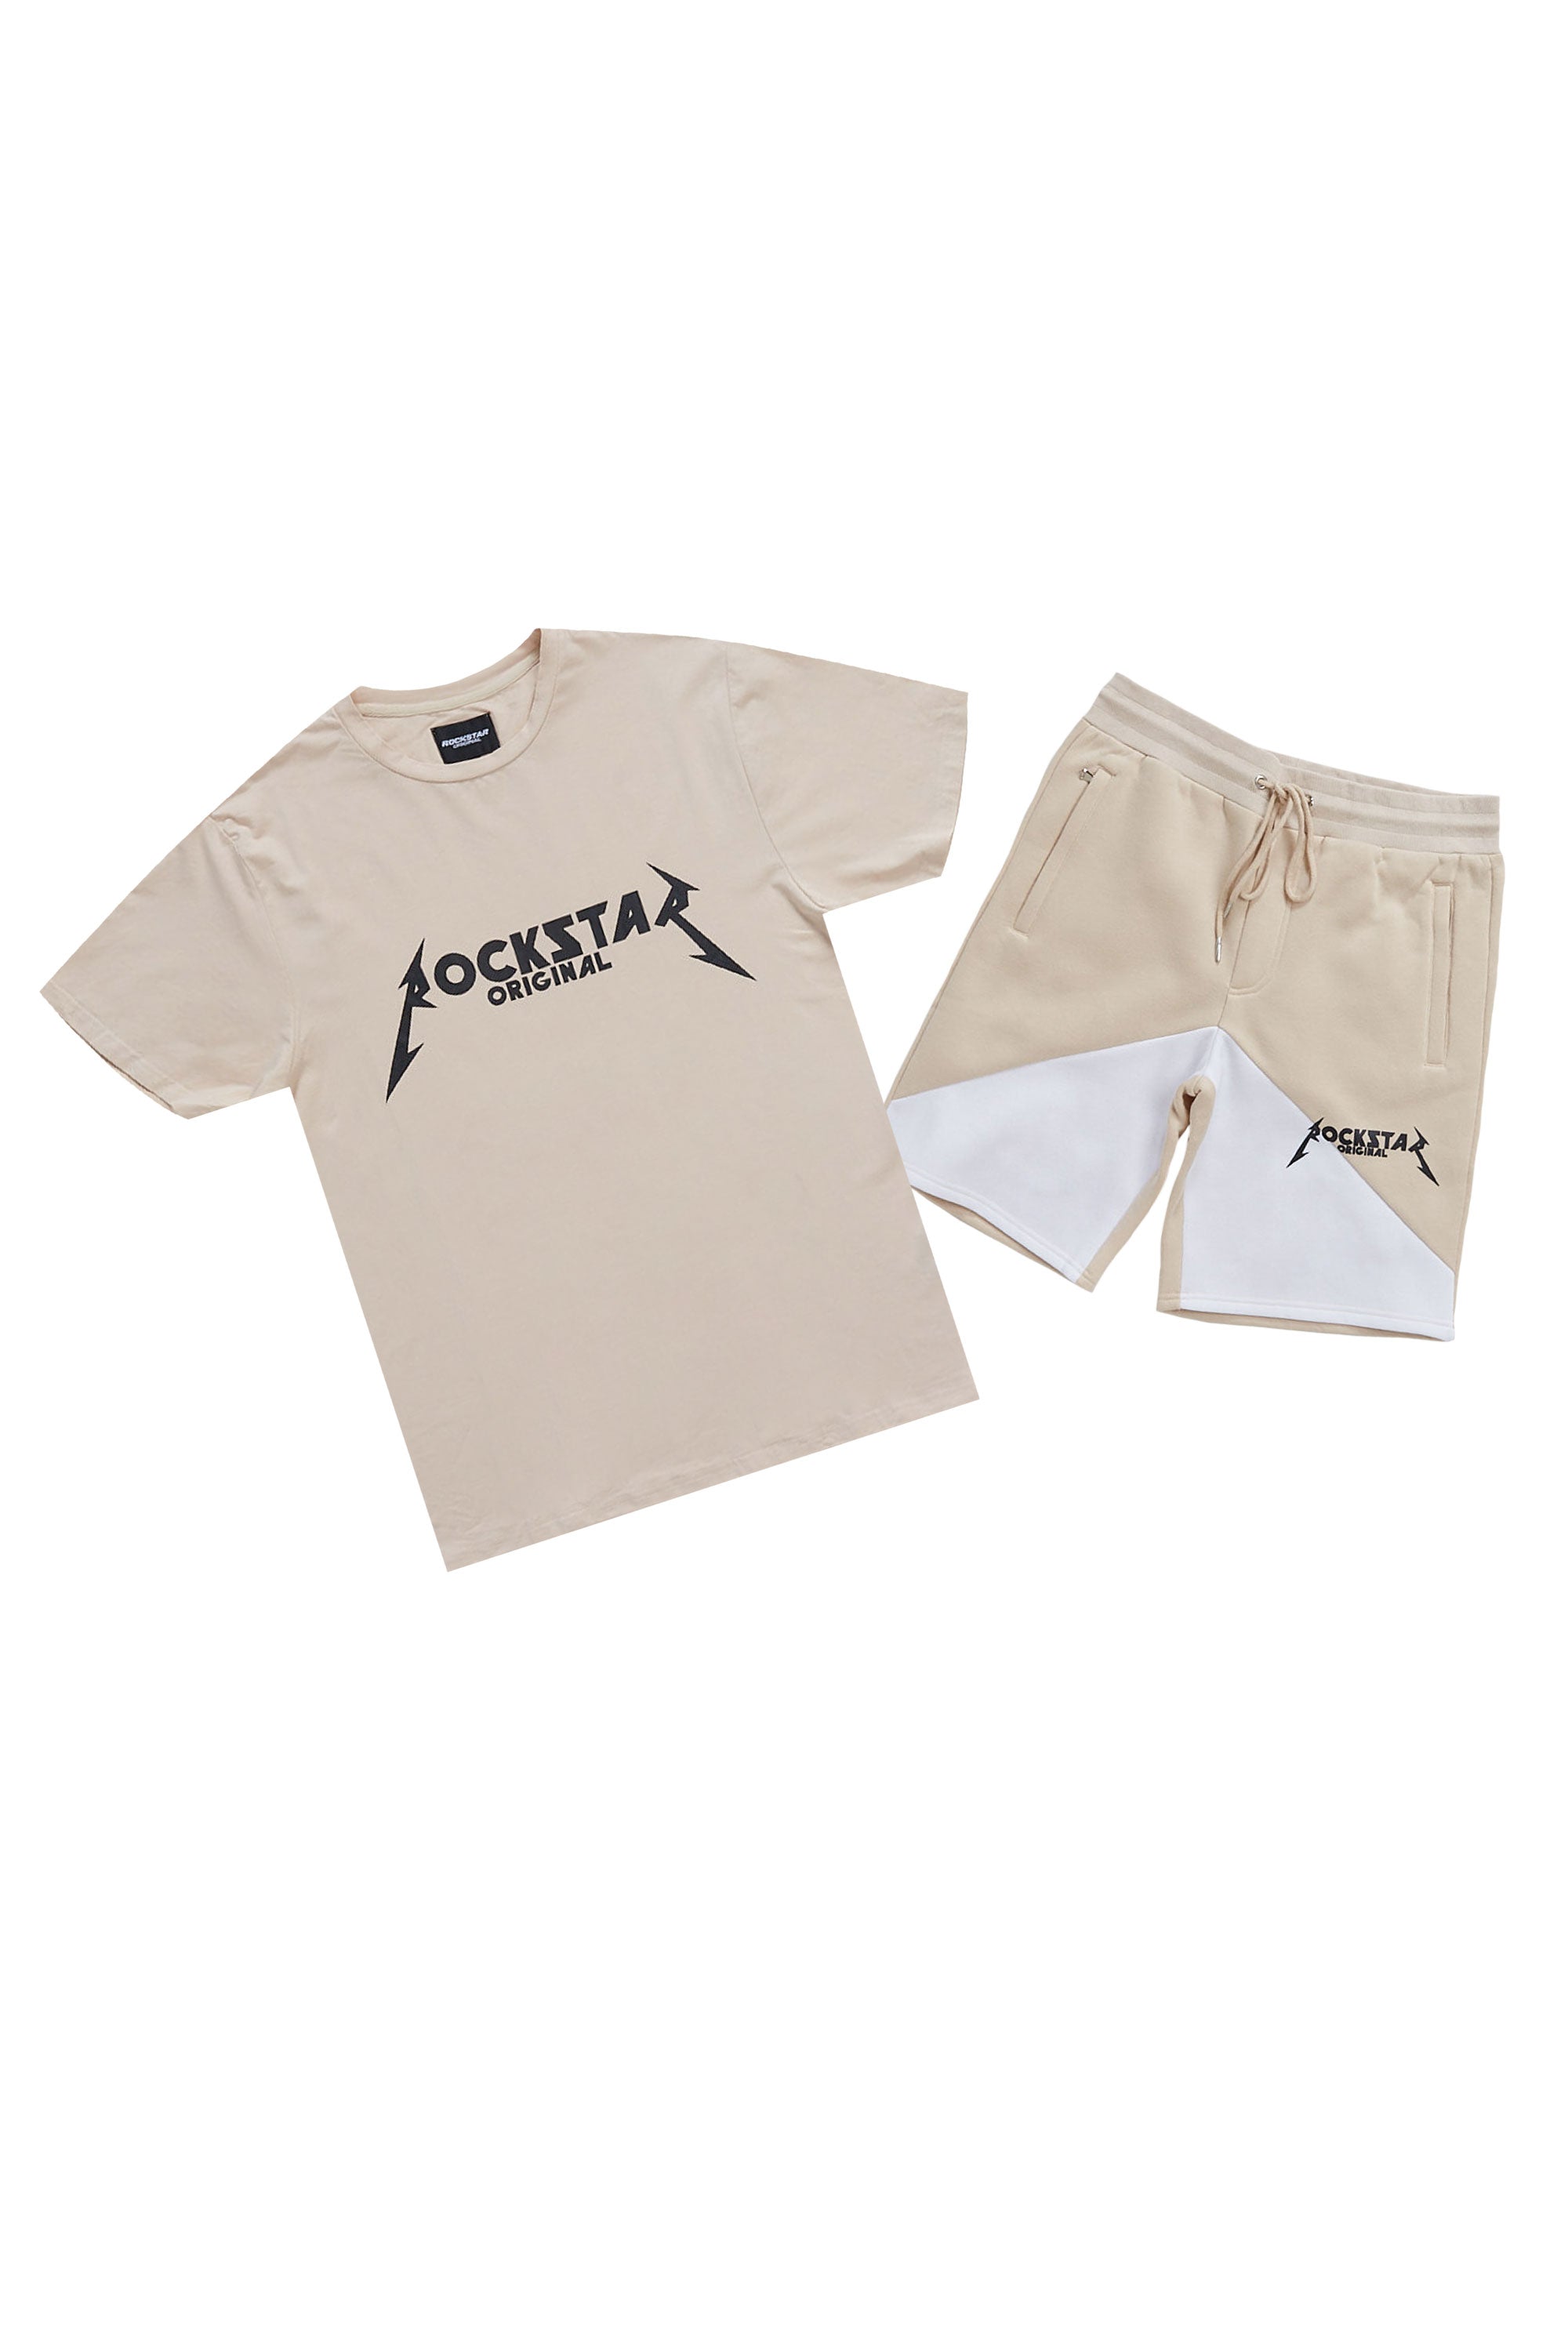 Piece and Matching Shirts Shorts and Two Set: Shirt Men\'s Short